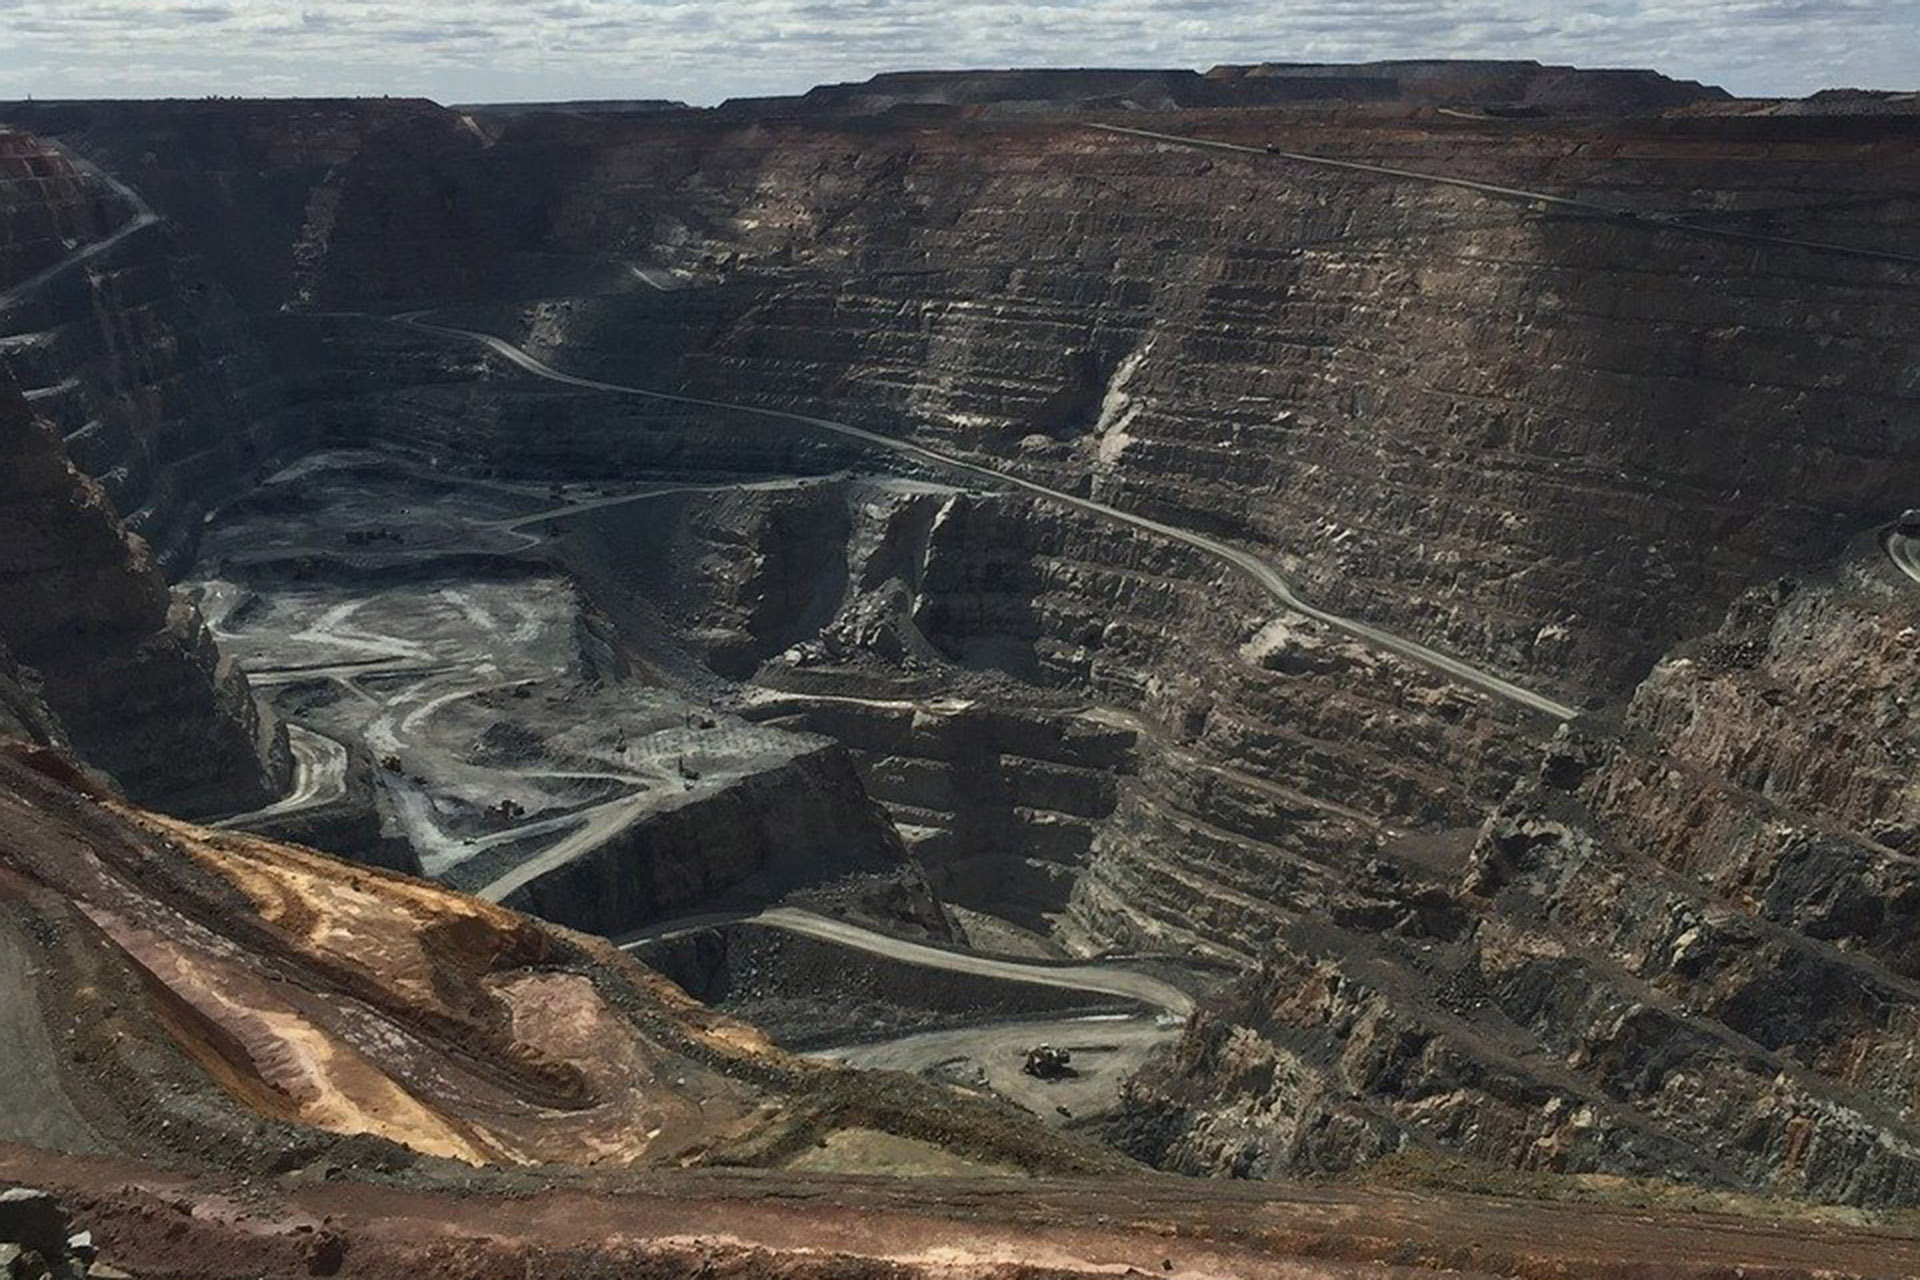  Mine site in Australia.